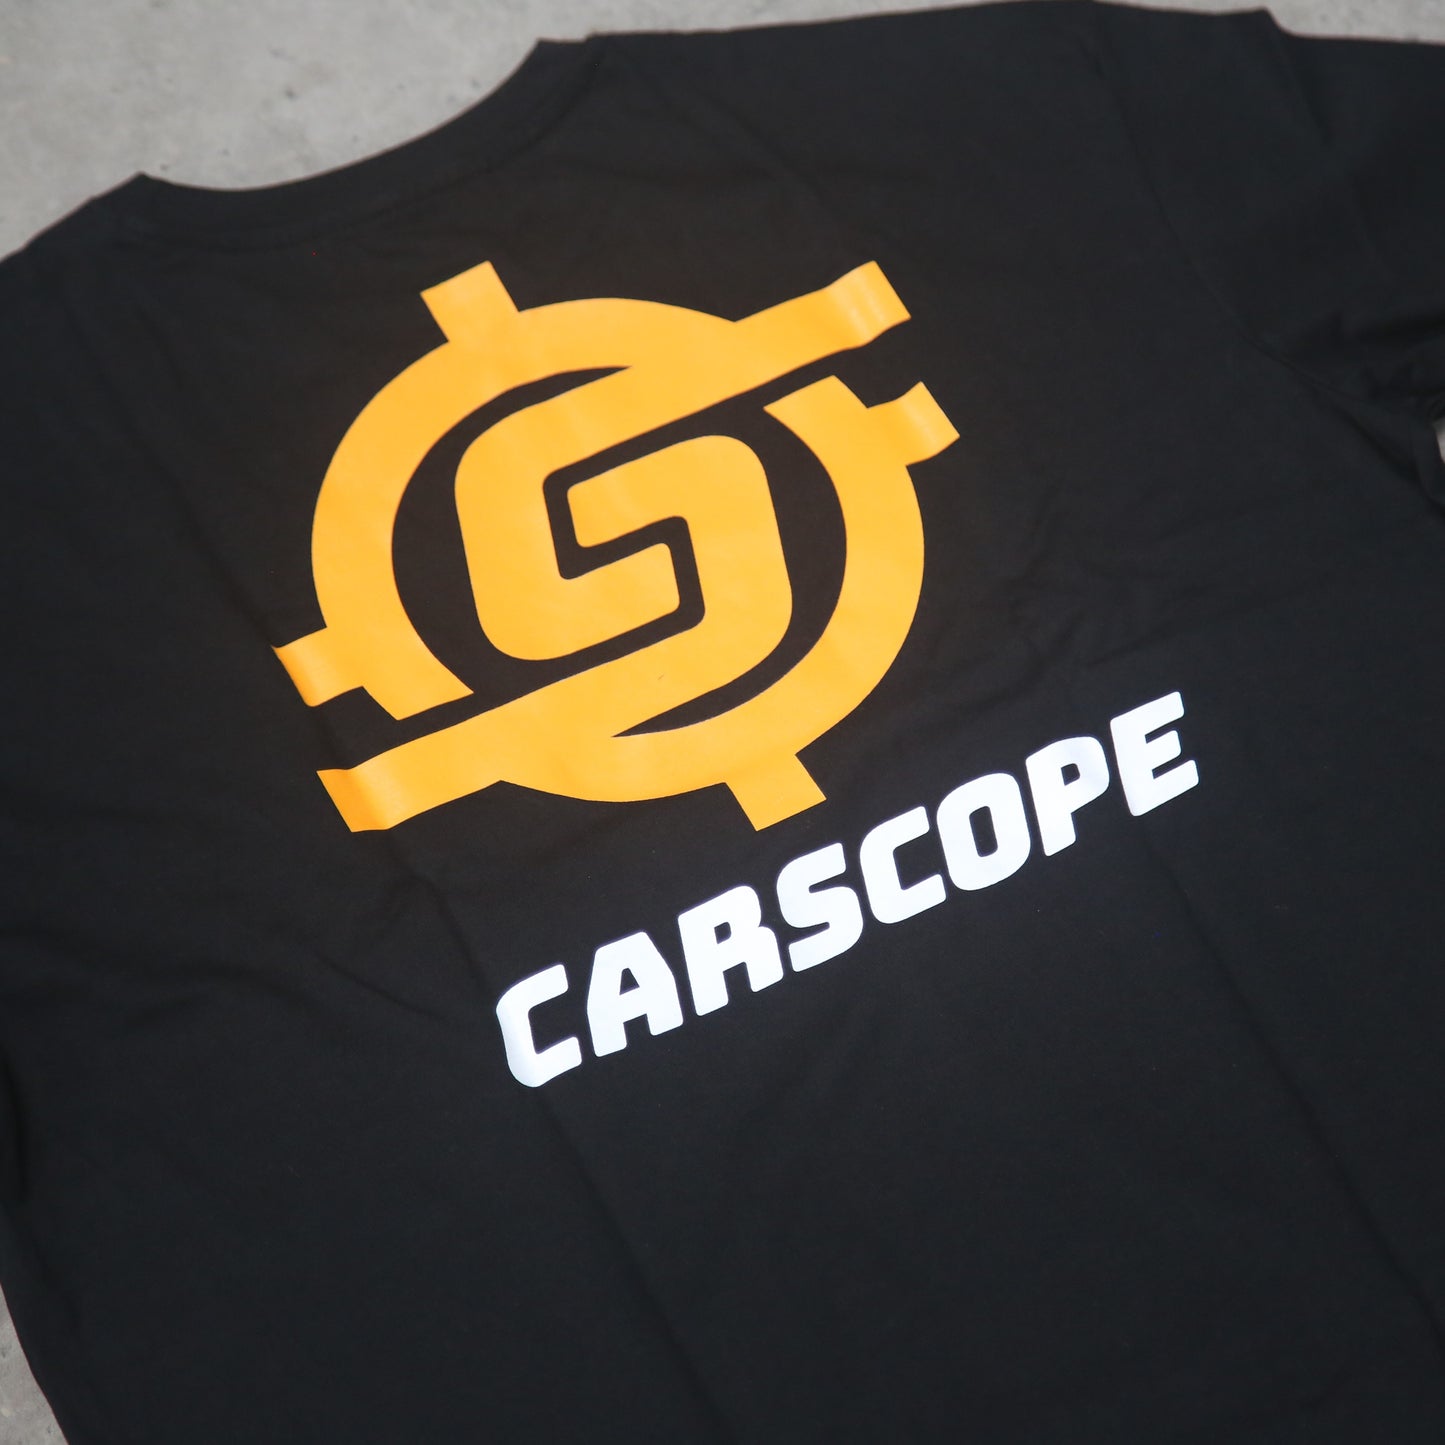 Carscope Logo T-Shirt